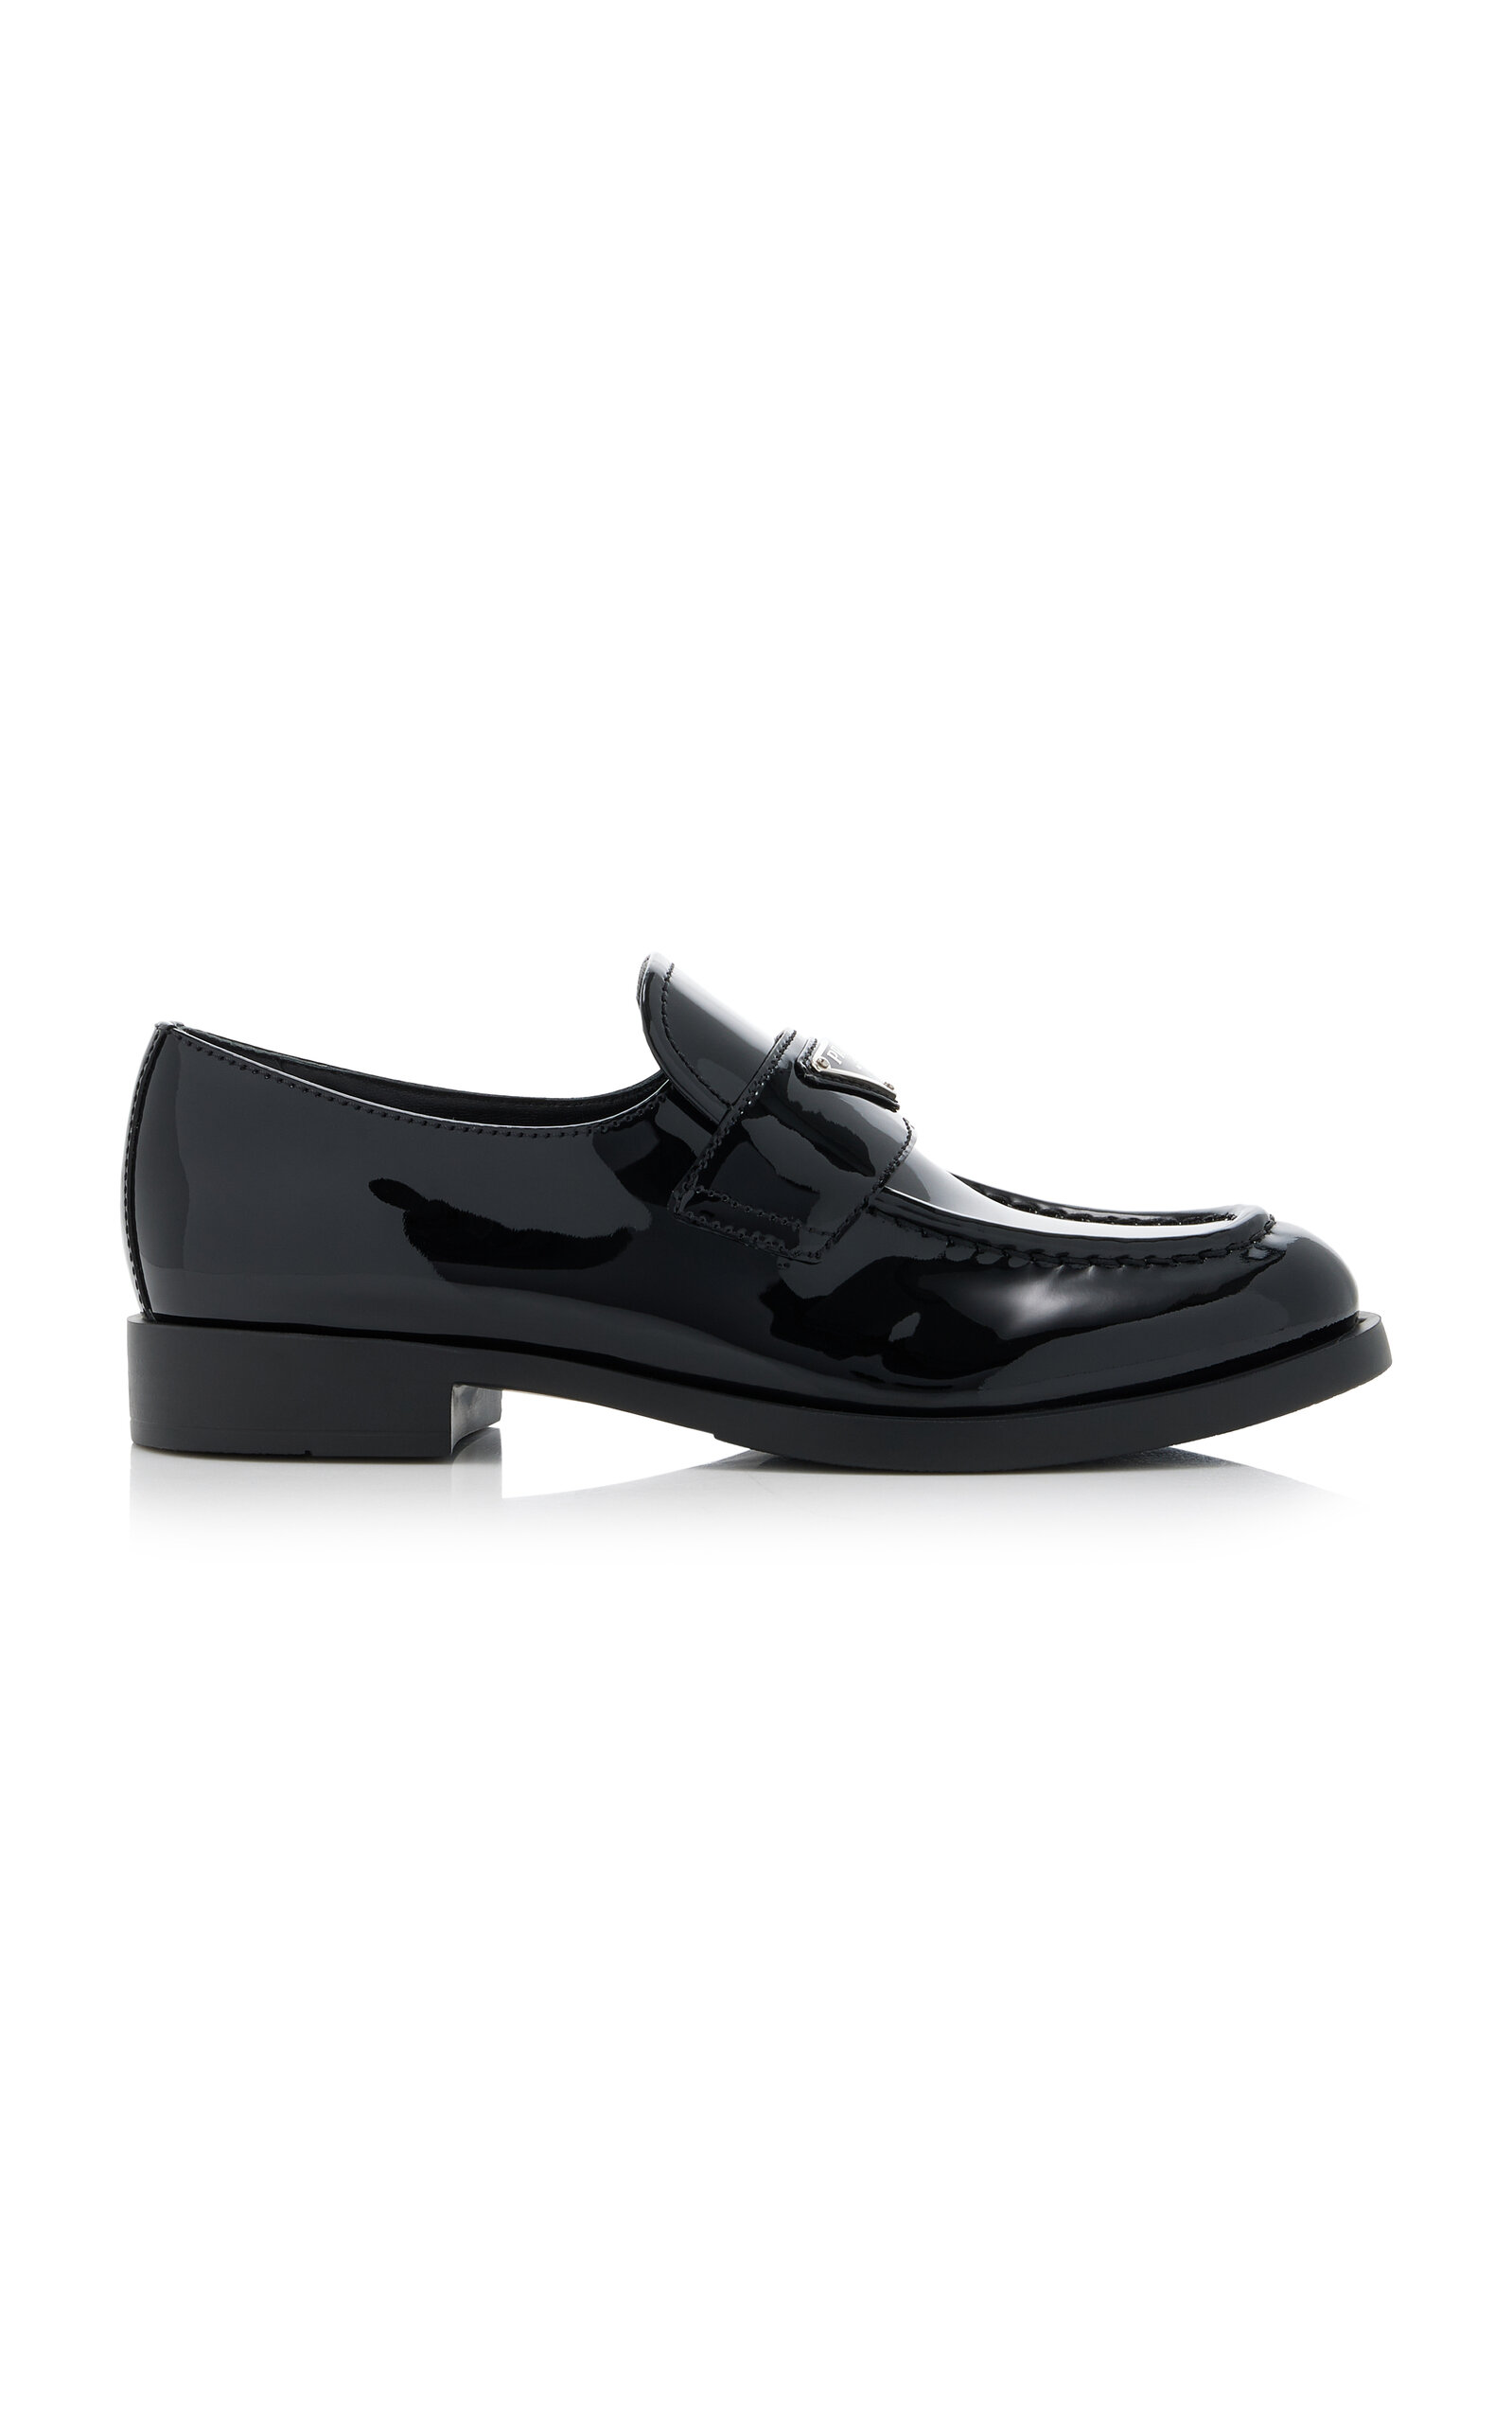 Prada - Patent Leather Loafers - Black - IT 39 - Moda Operandi